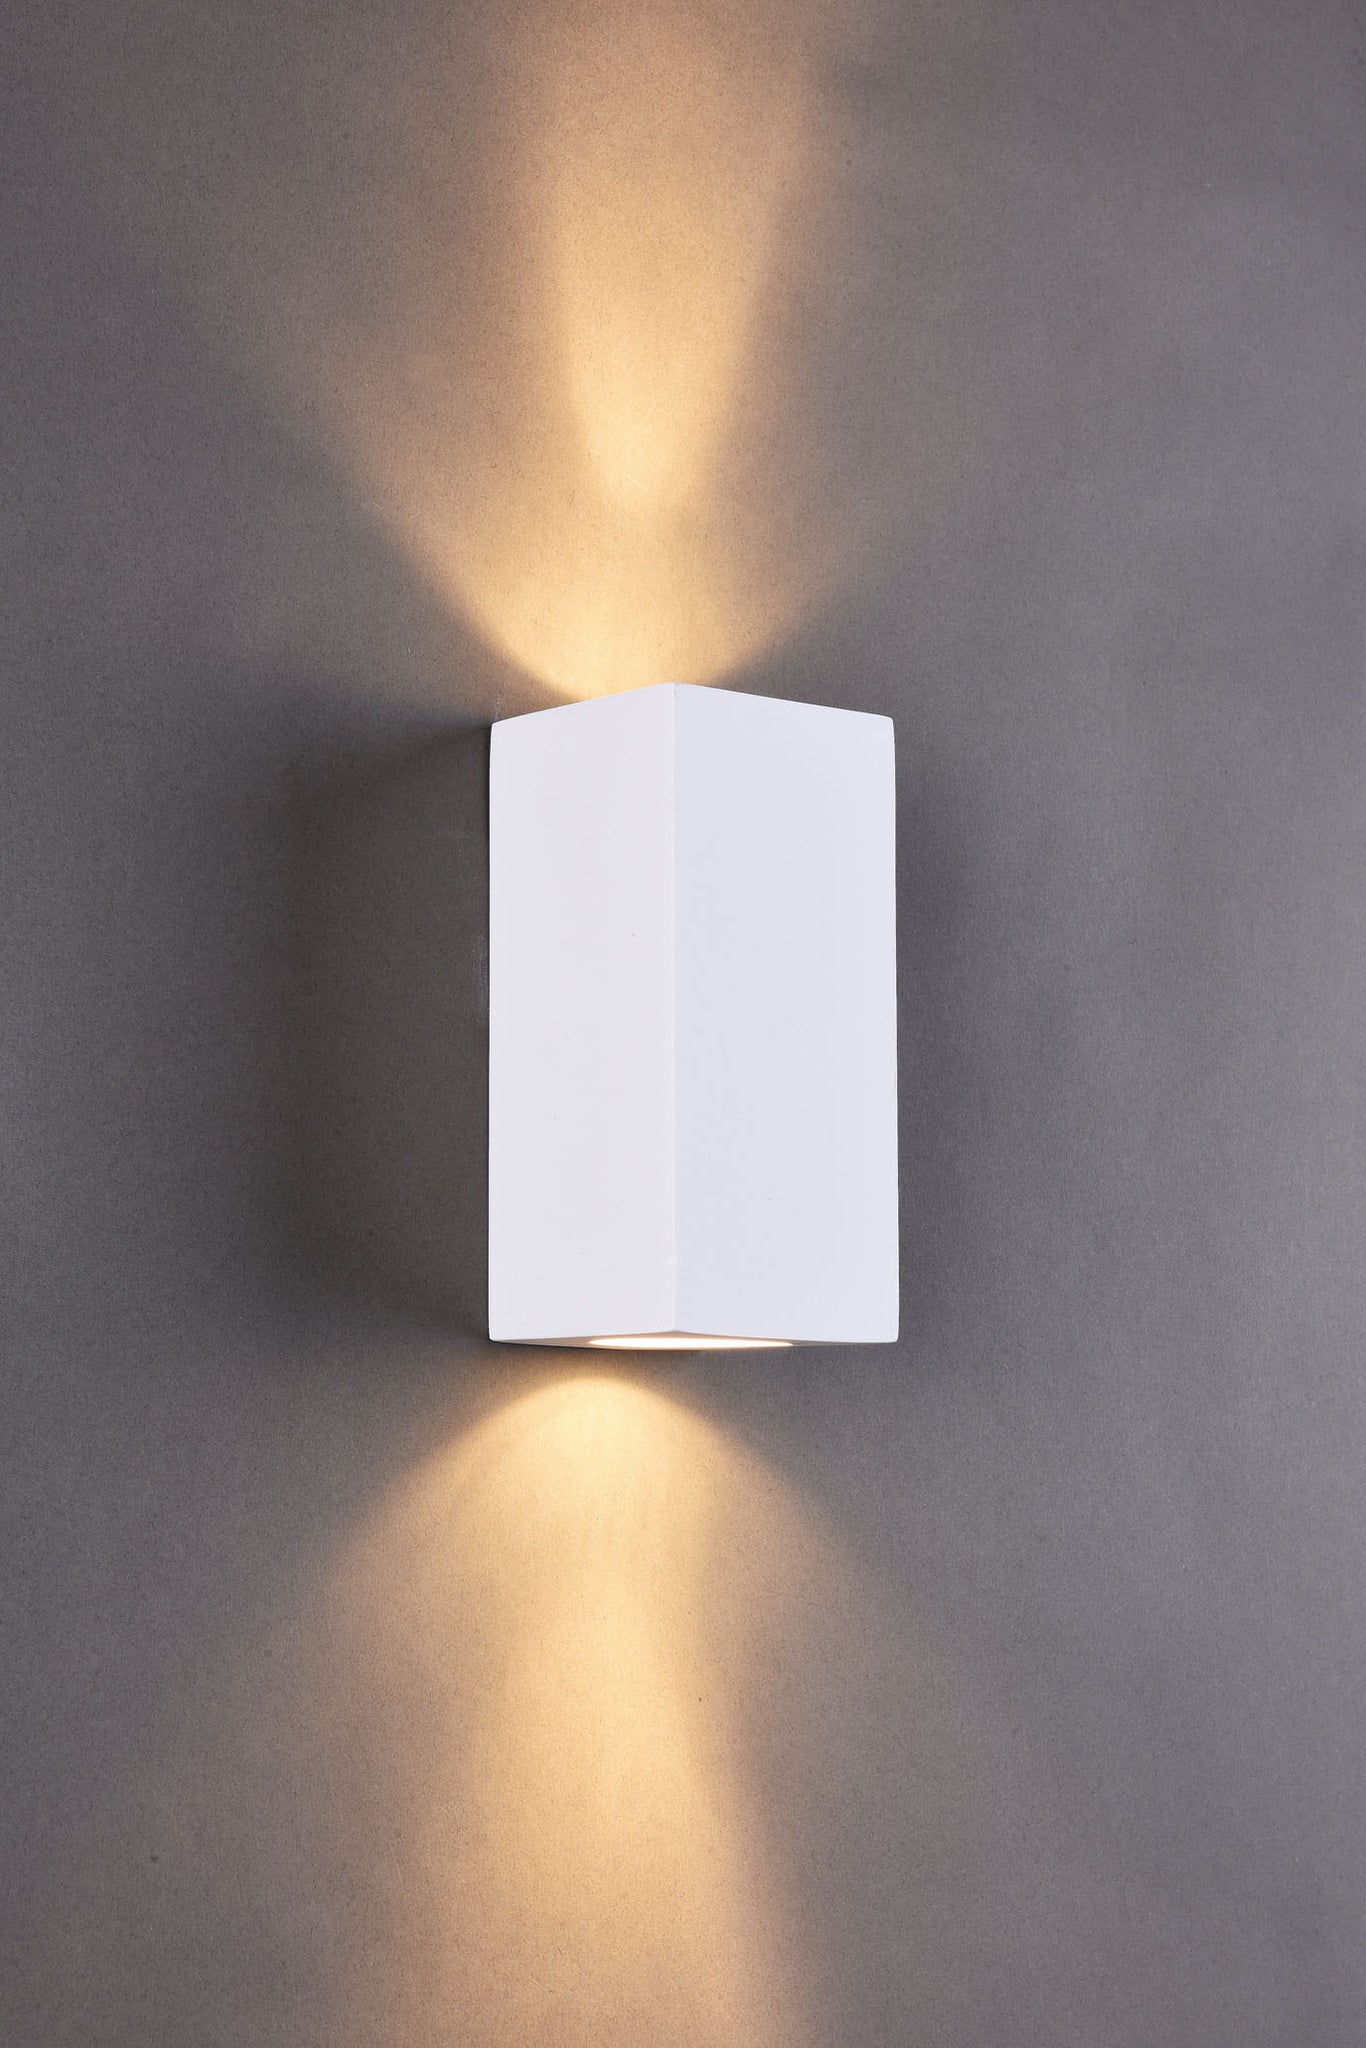 Ceramic Rectangle Shaped Wall Light, 2 lights Up/Down White Paintable GU10 sockets (NO BULBs)